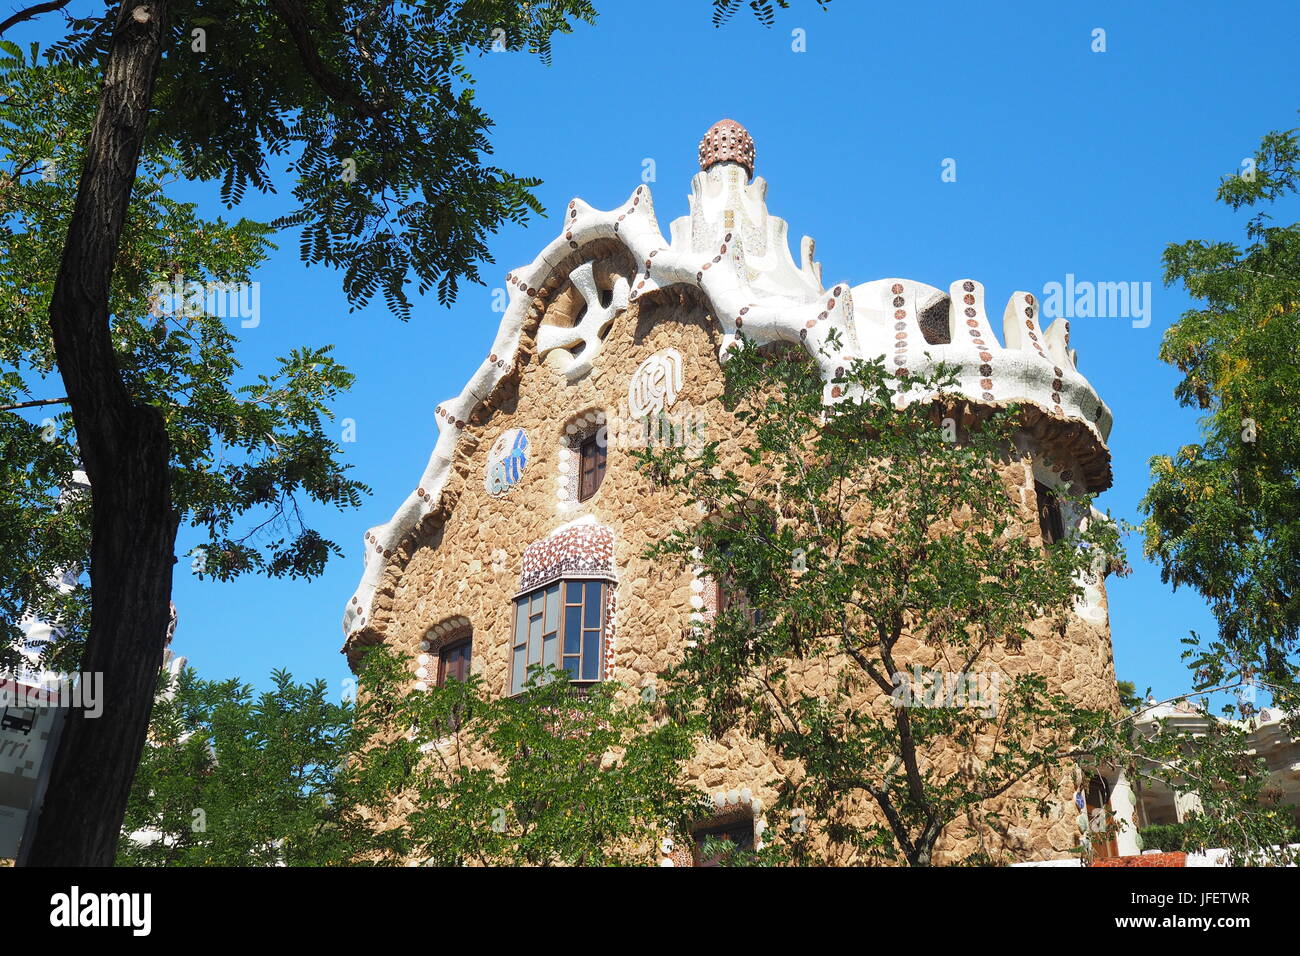 Barcelona, Spain: Antoni Gaudì construction at Parc Guell Stock Photo